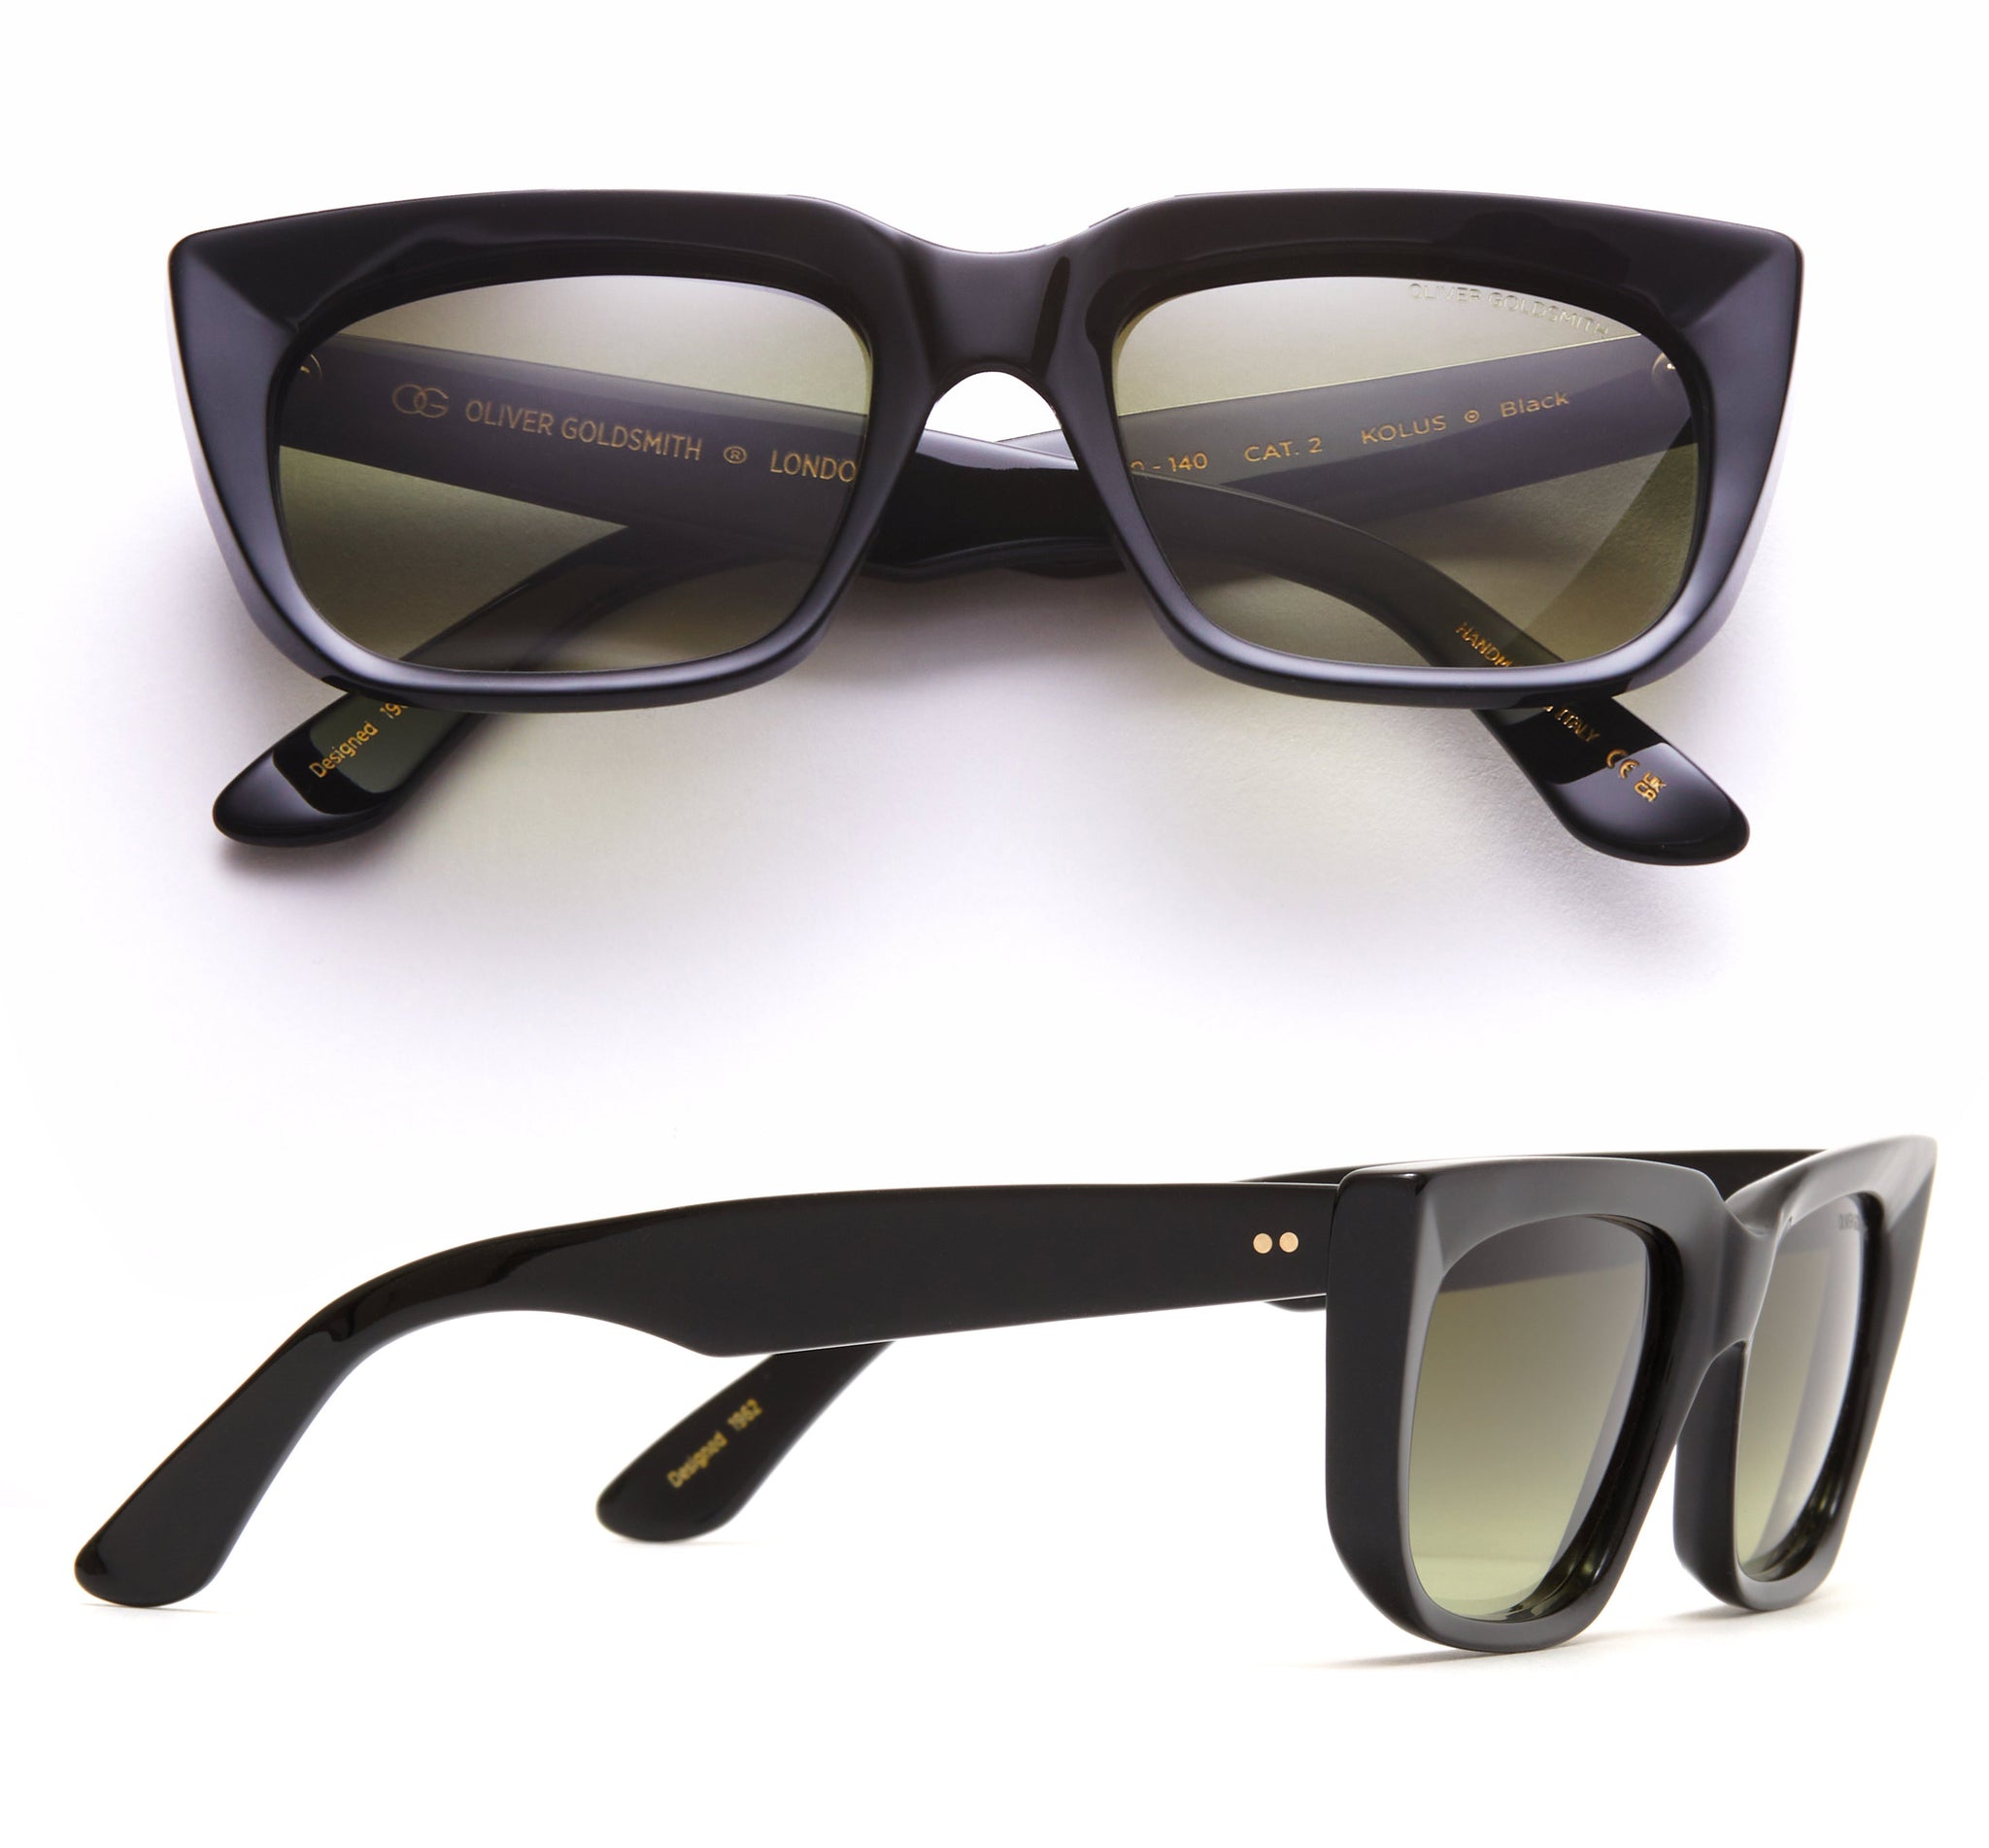 Black Sunglasses worn by John Lennon